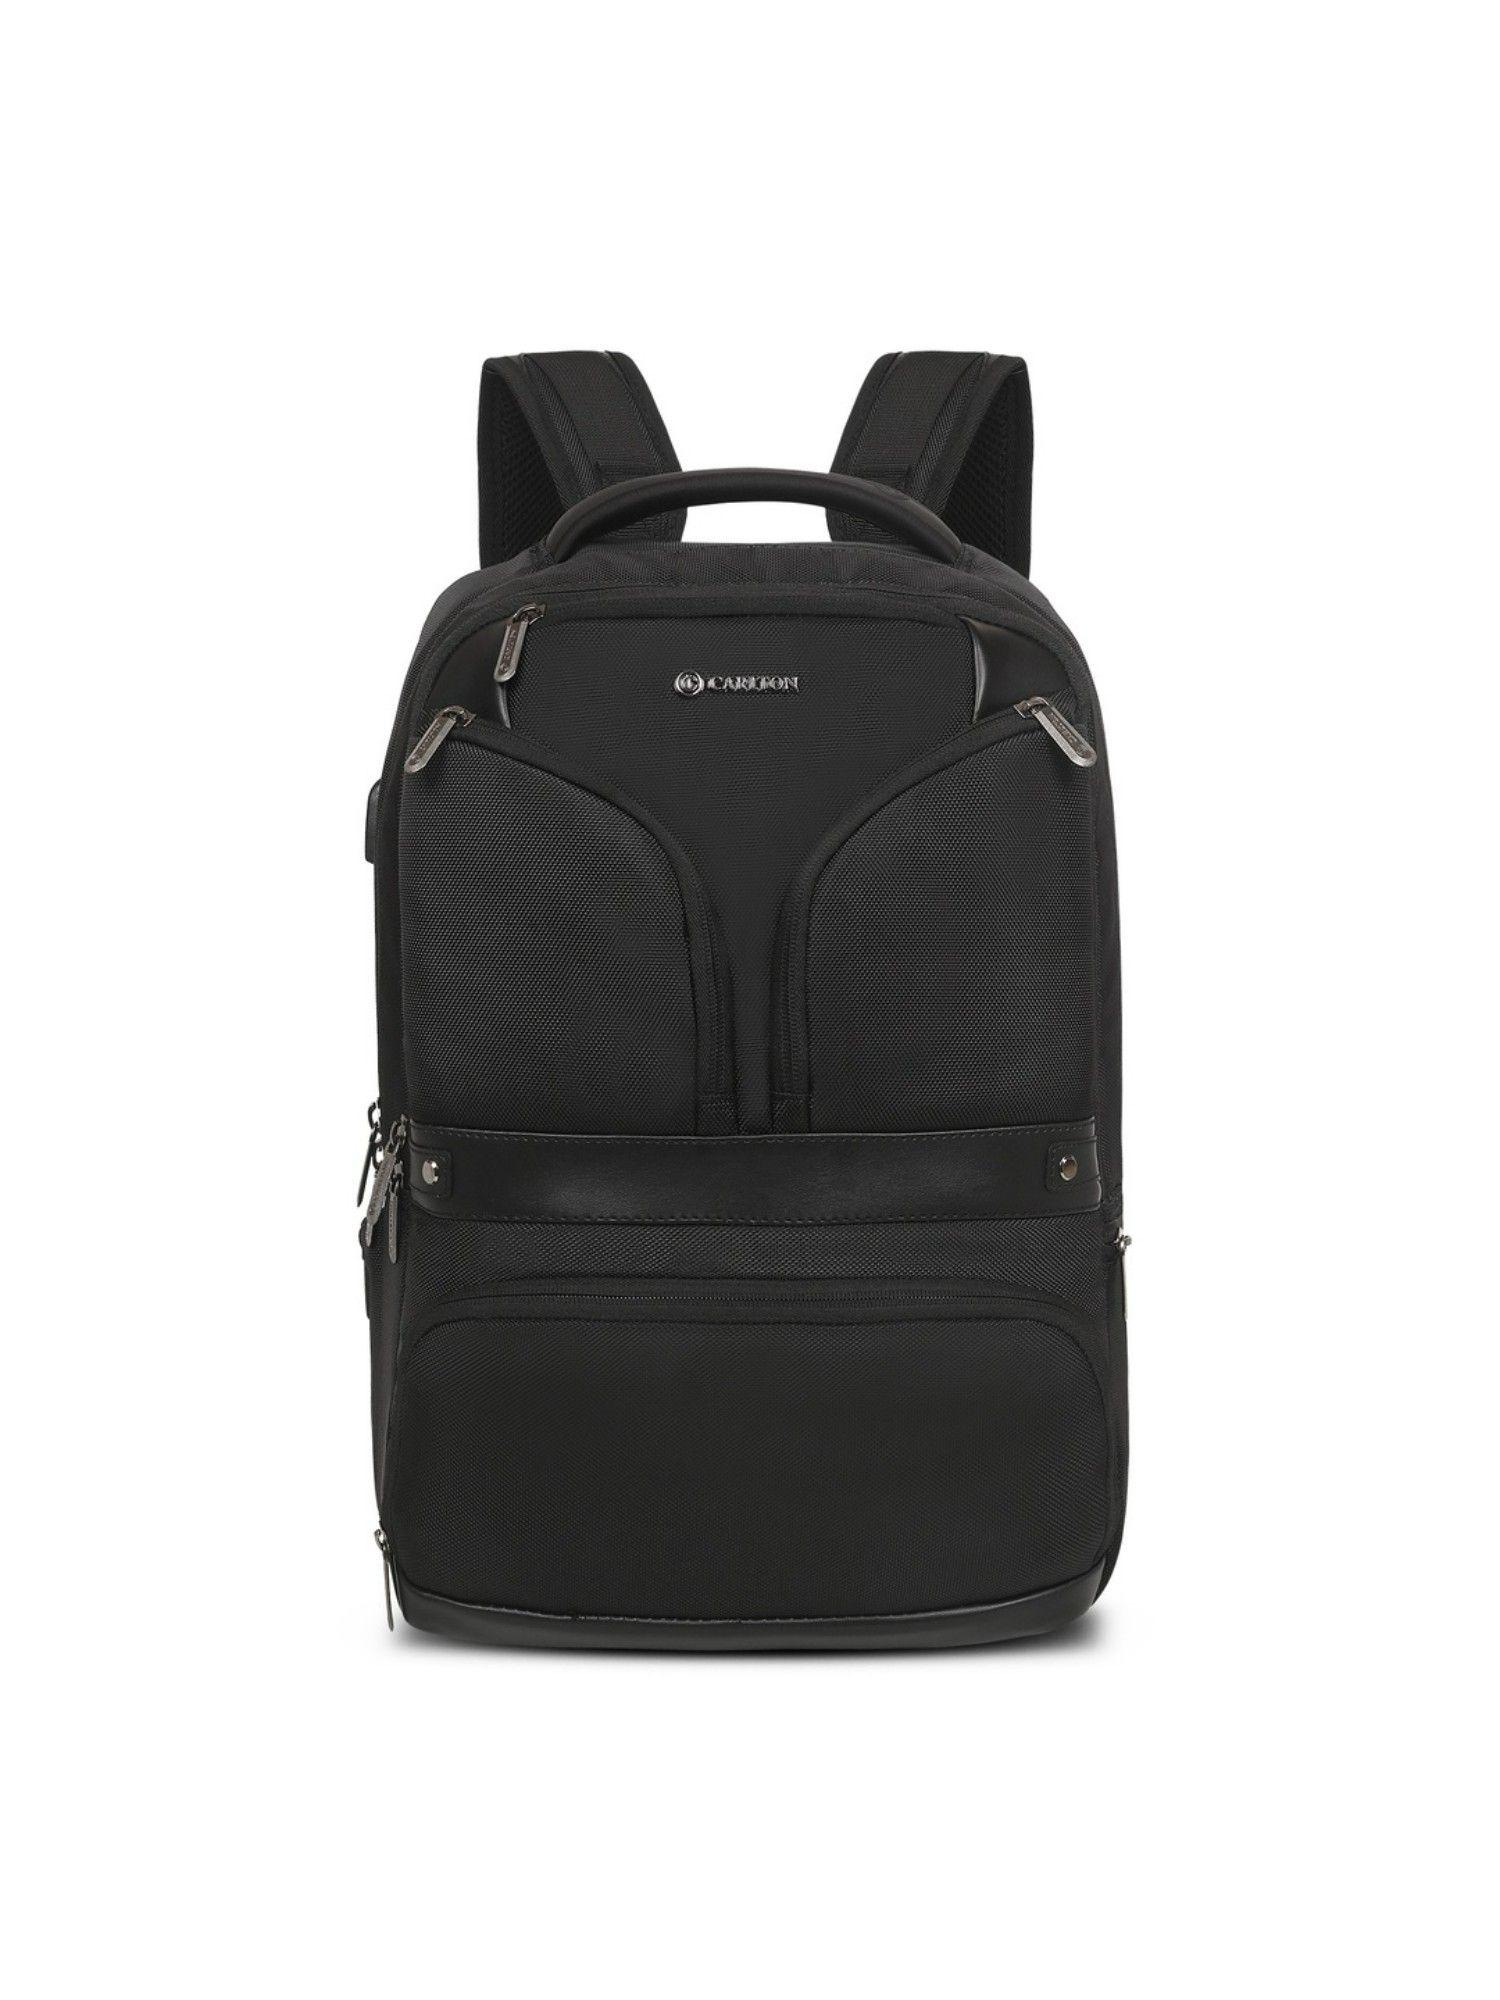 hampshire 03 laptop backpack ferrous black